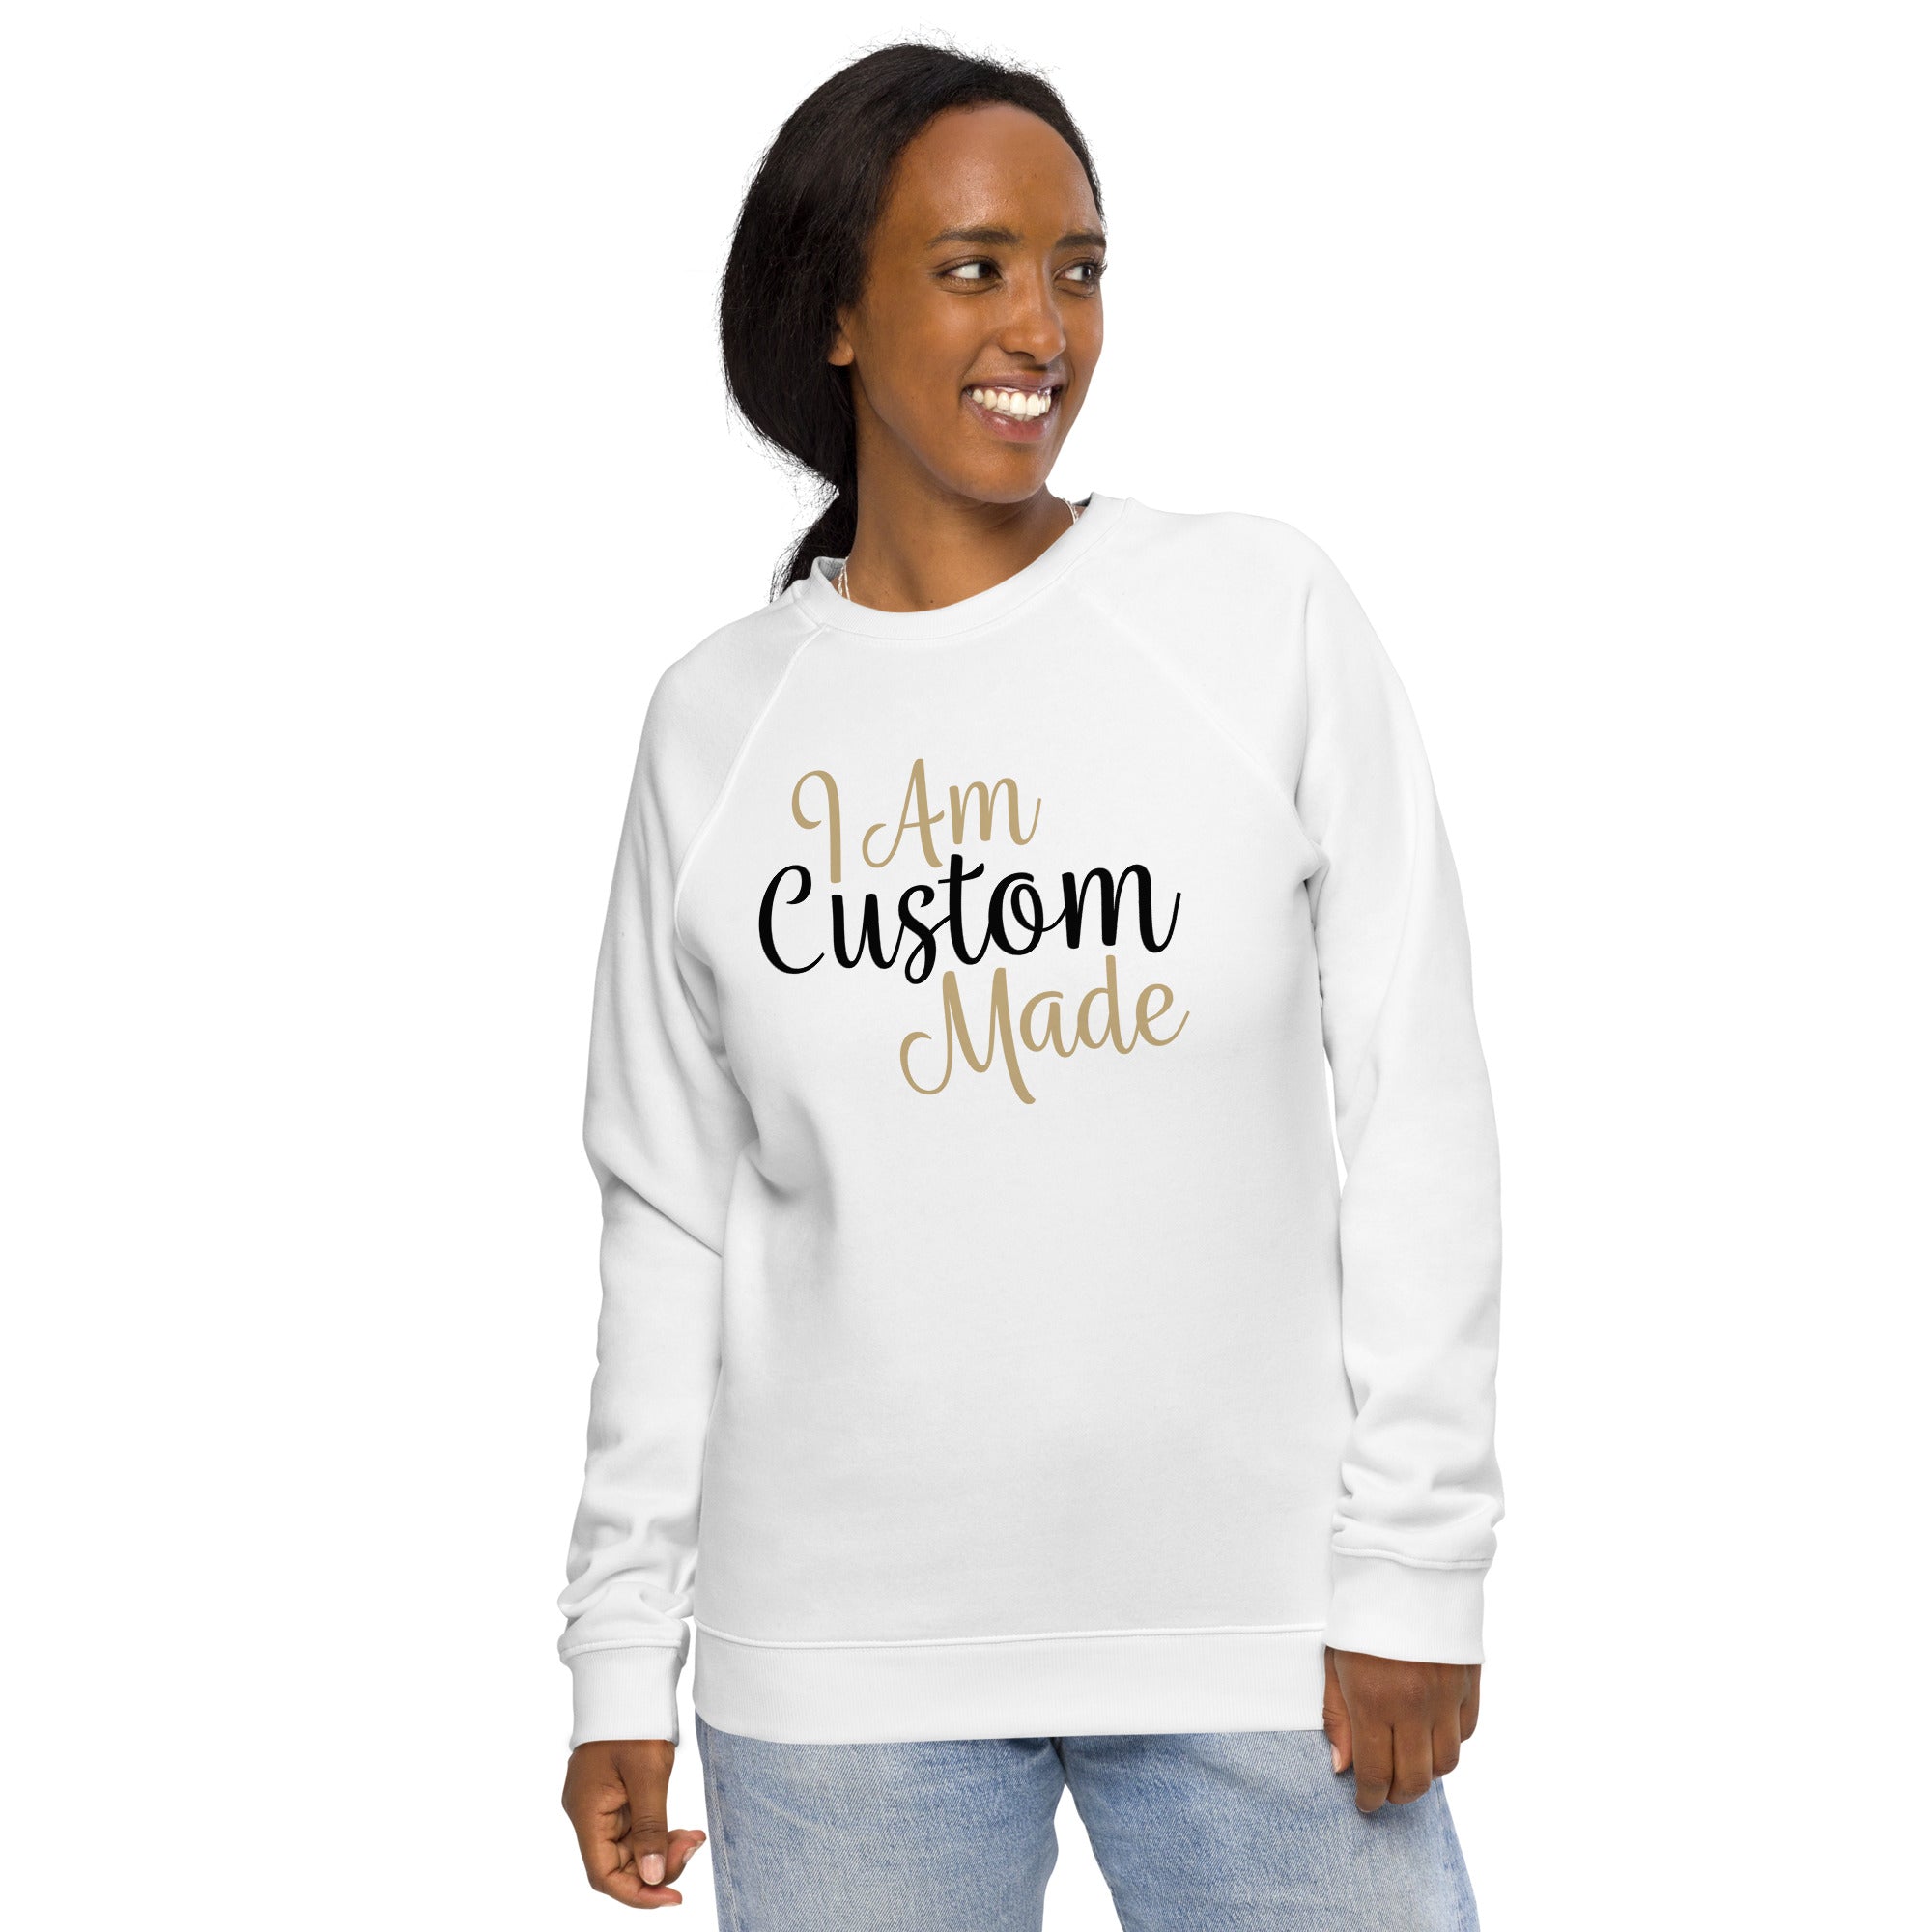 I AM CUSTOM MADE | Unisex organic raglan sweatshirt